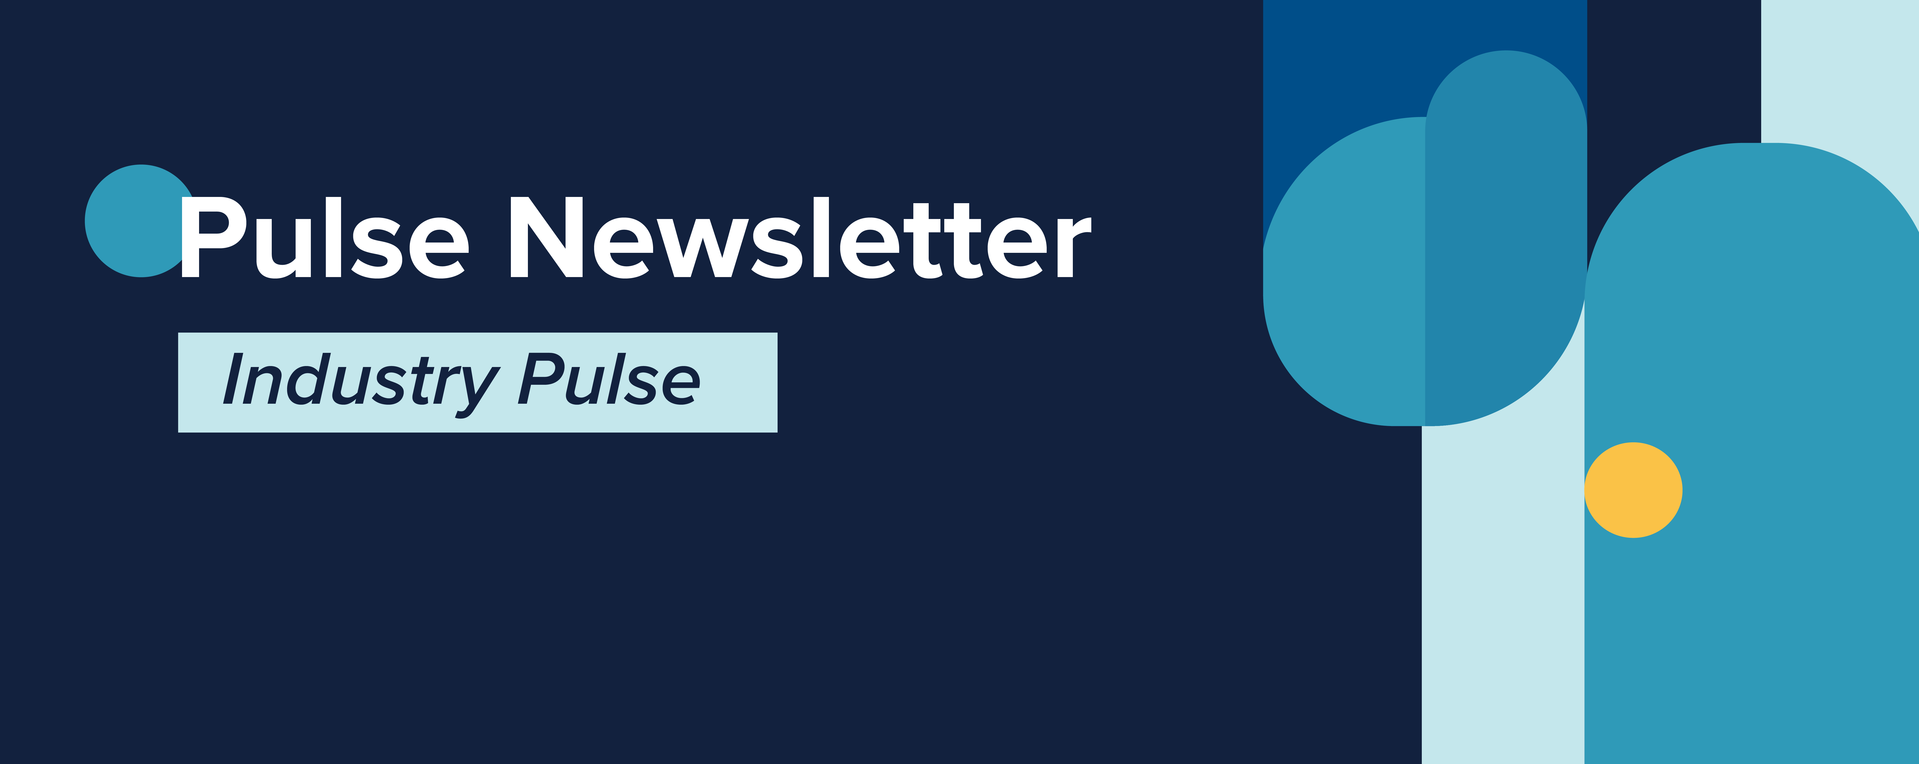 pulse newsletter industry pulse